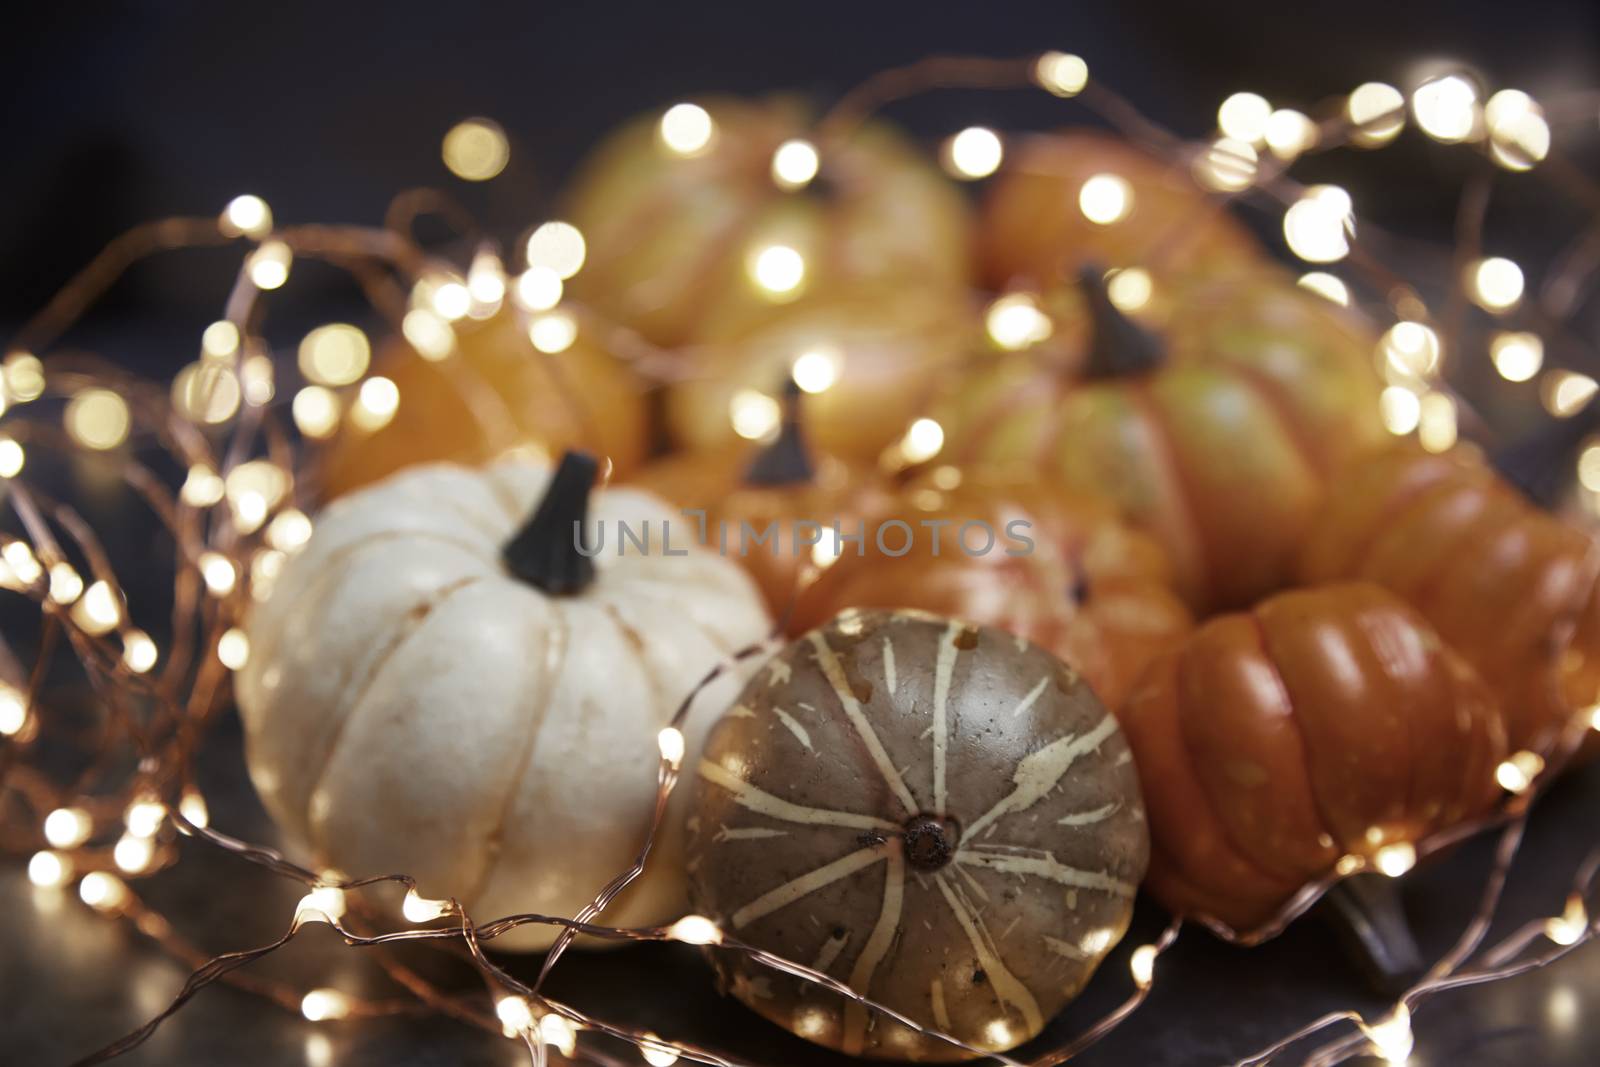 Halloween pumpkins with illumination by Novic